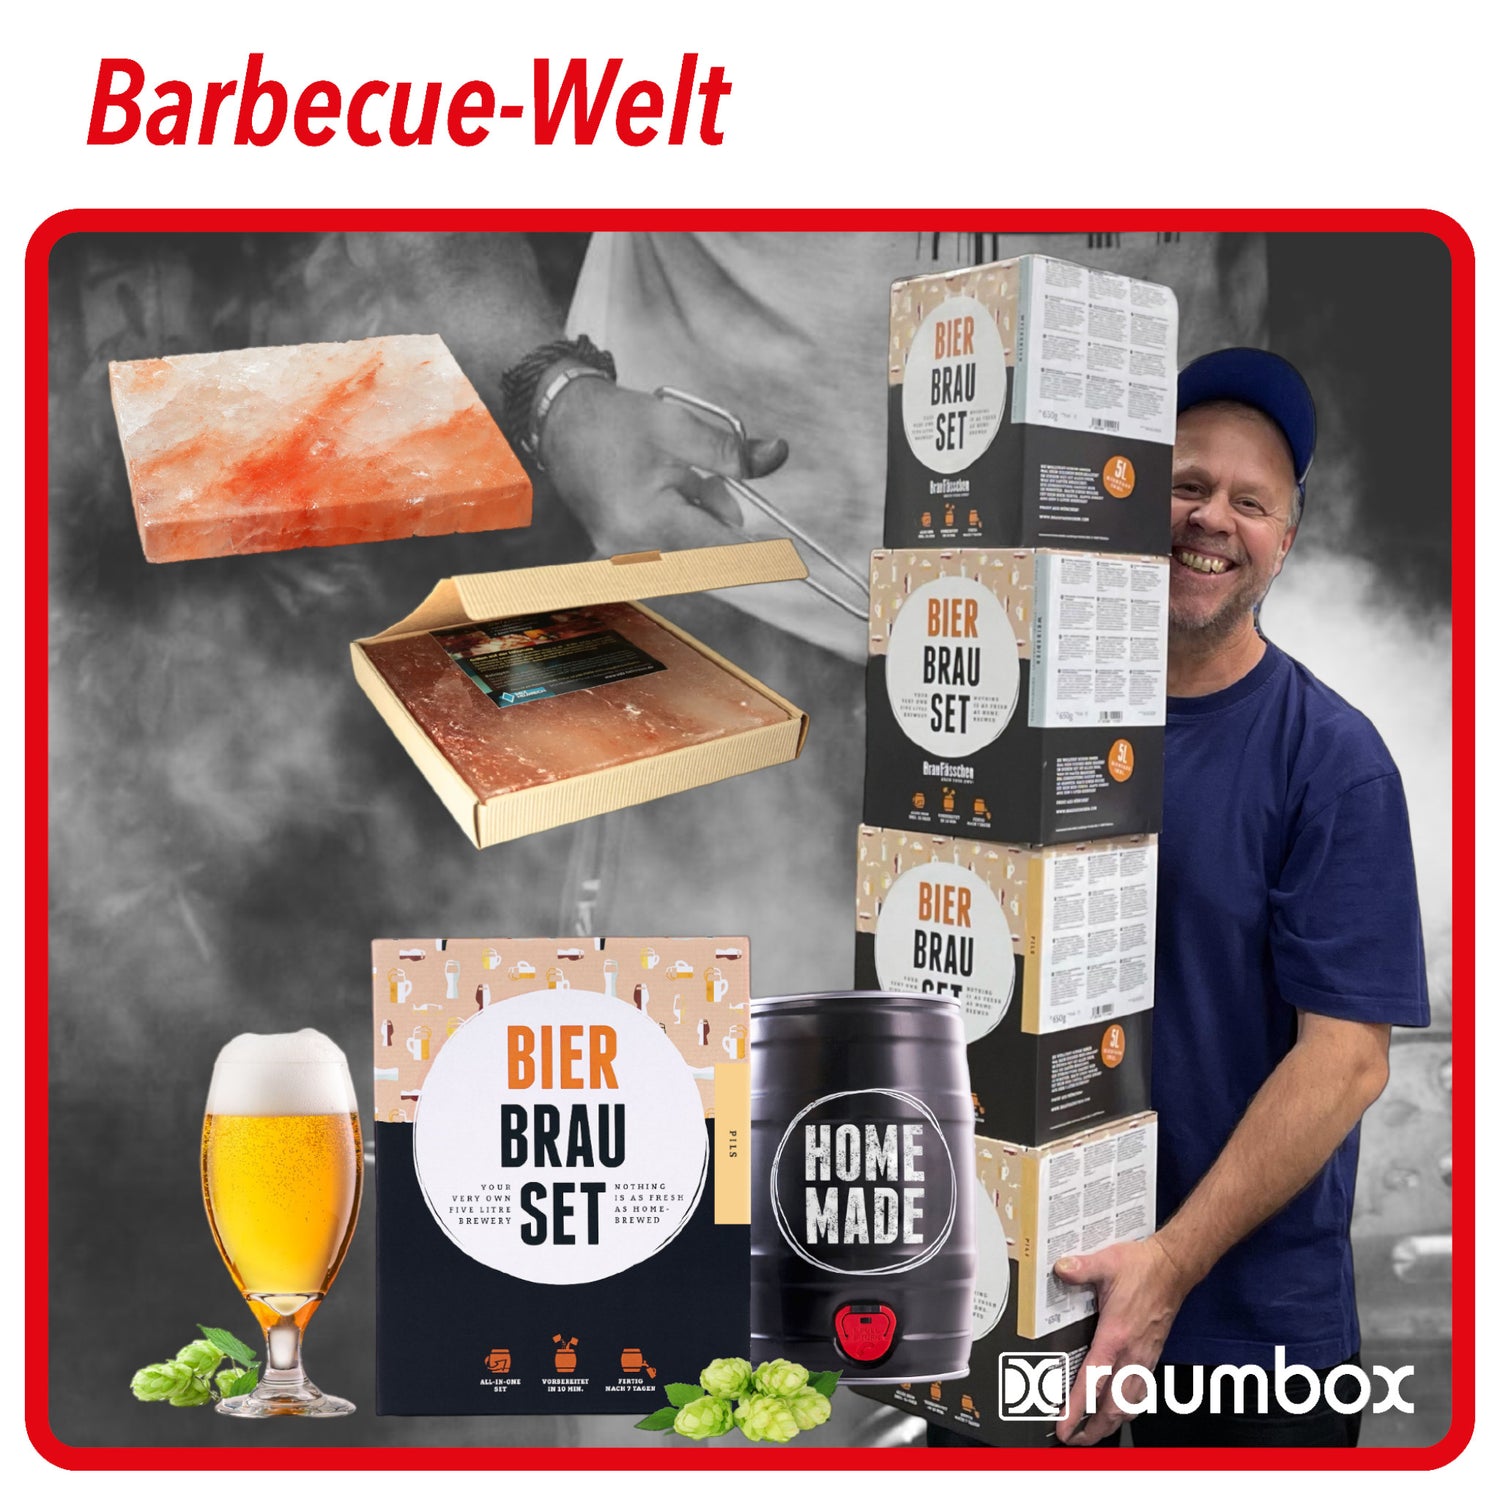 Barbecue-Welt